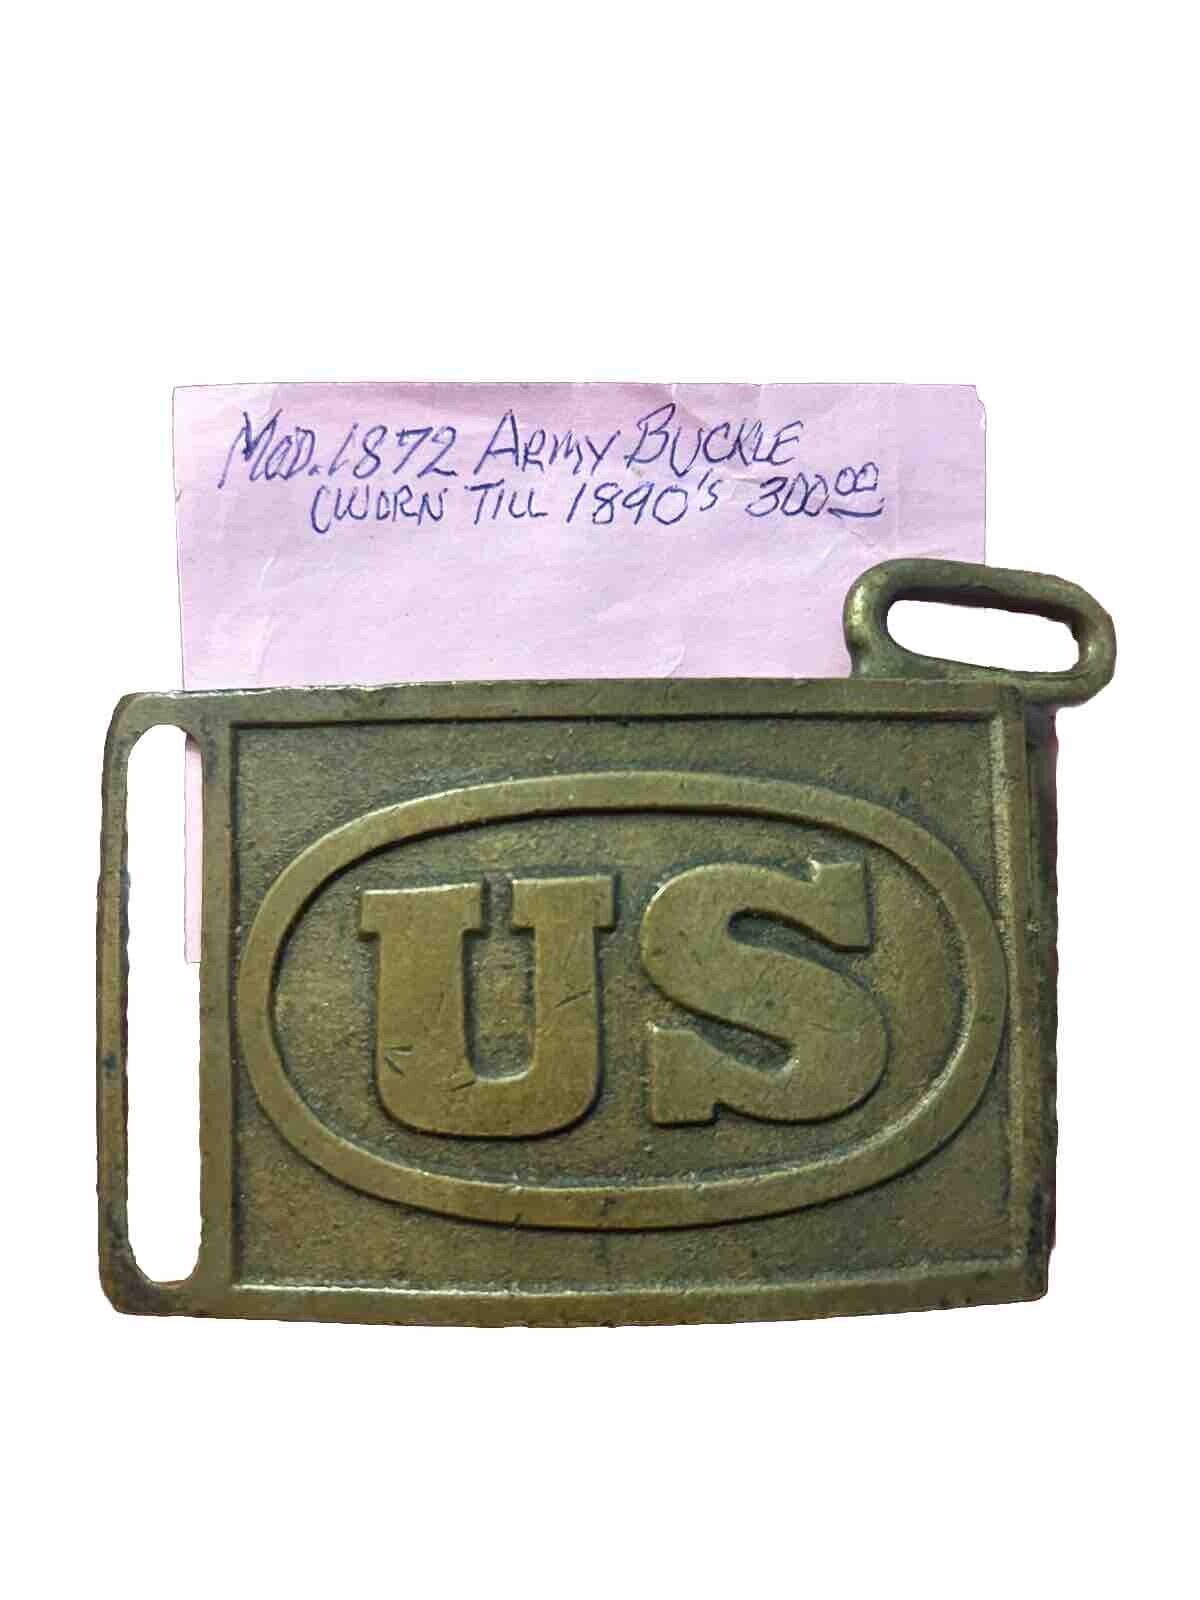 Mod. 1872 Army Buckle